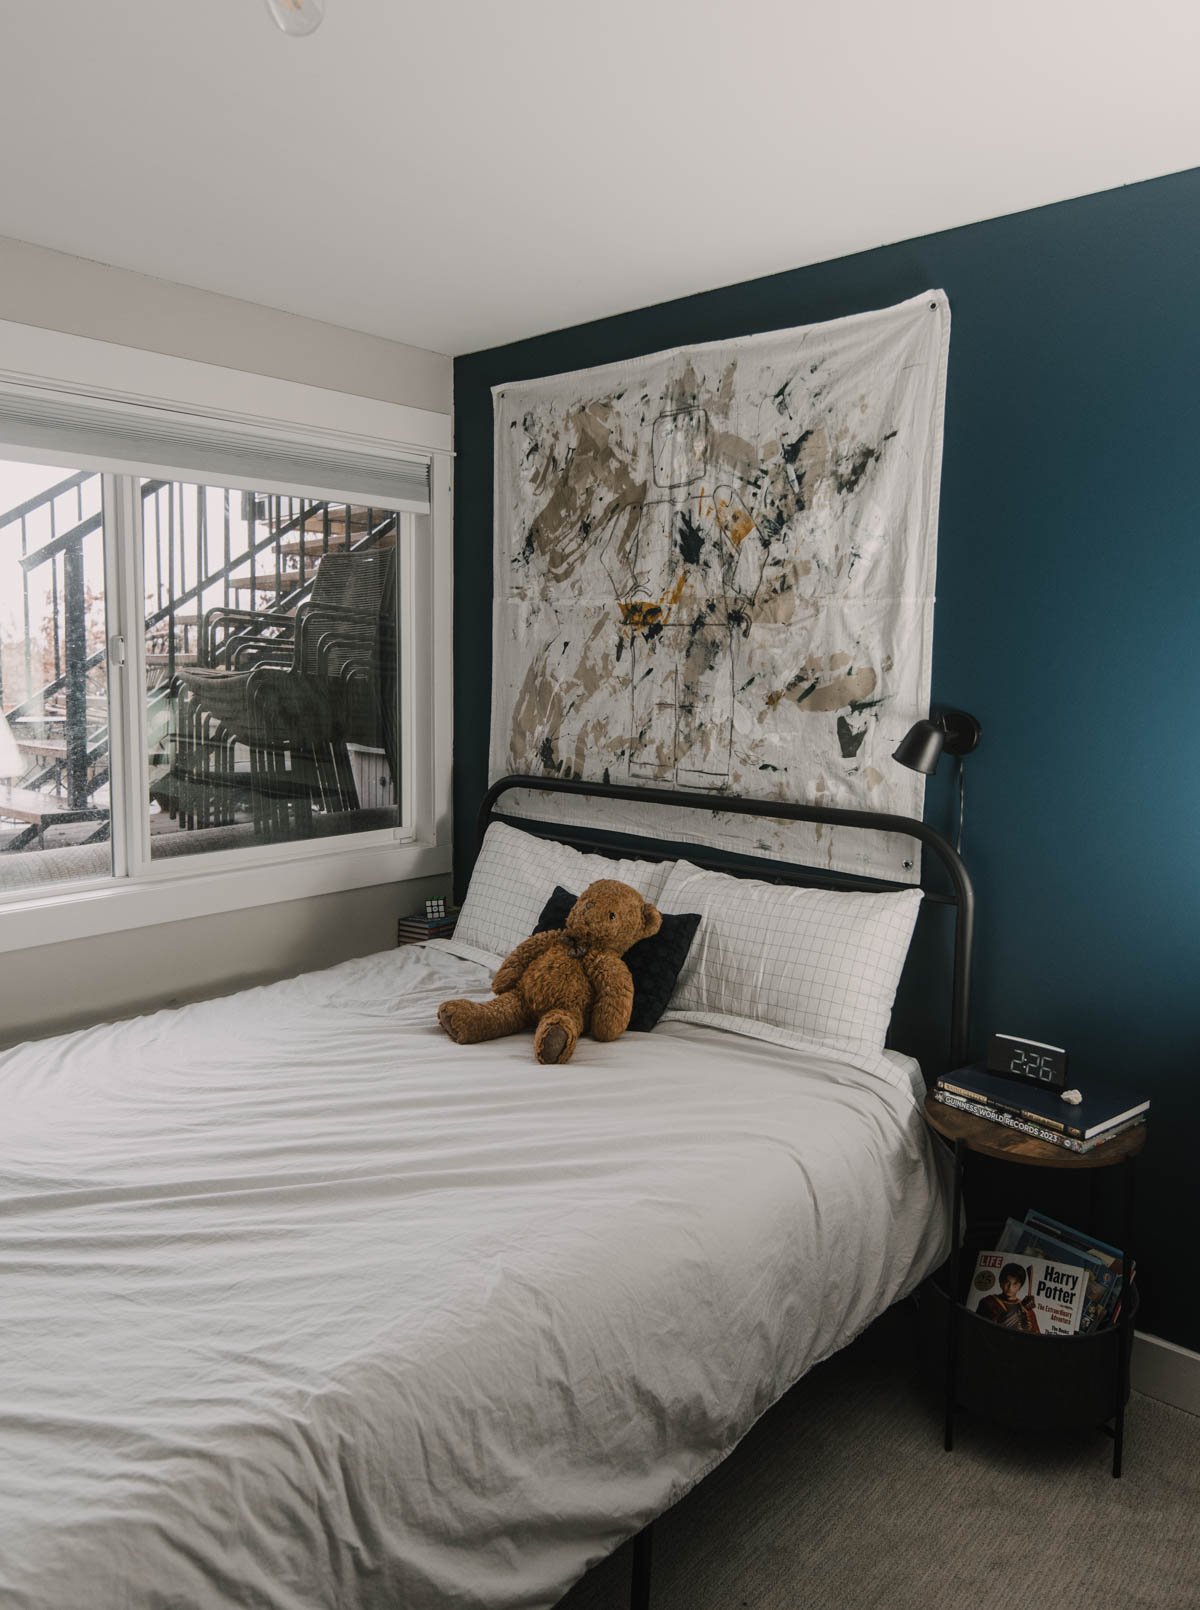 DIY Tween Bedroom decor with moody blue walls and oversized lego wall hanging DIY